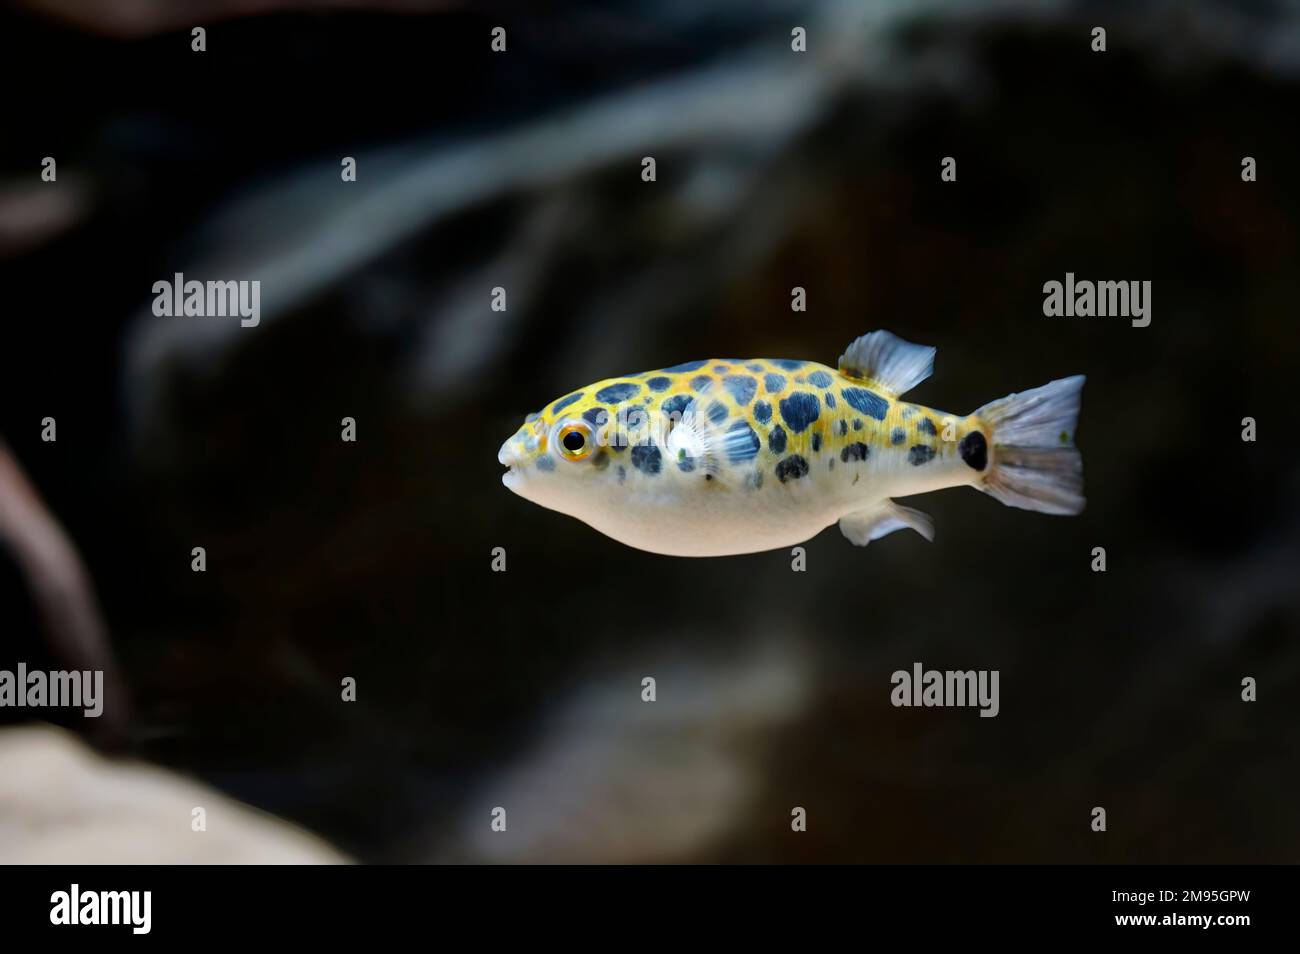 Green pufferfish or speckled pufferfish (Dichotomyctere nigroviridis) swimming with a dark background Stock Photo